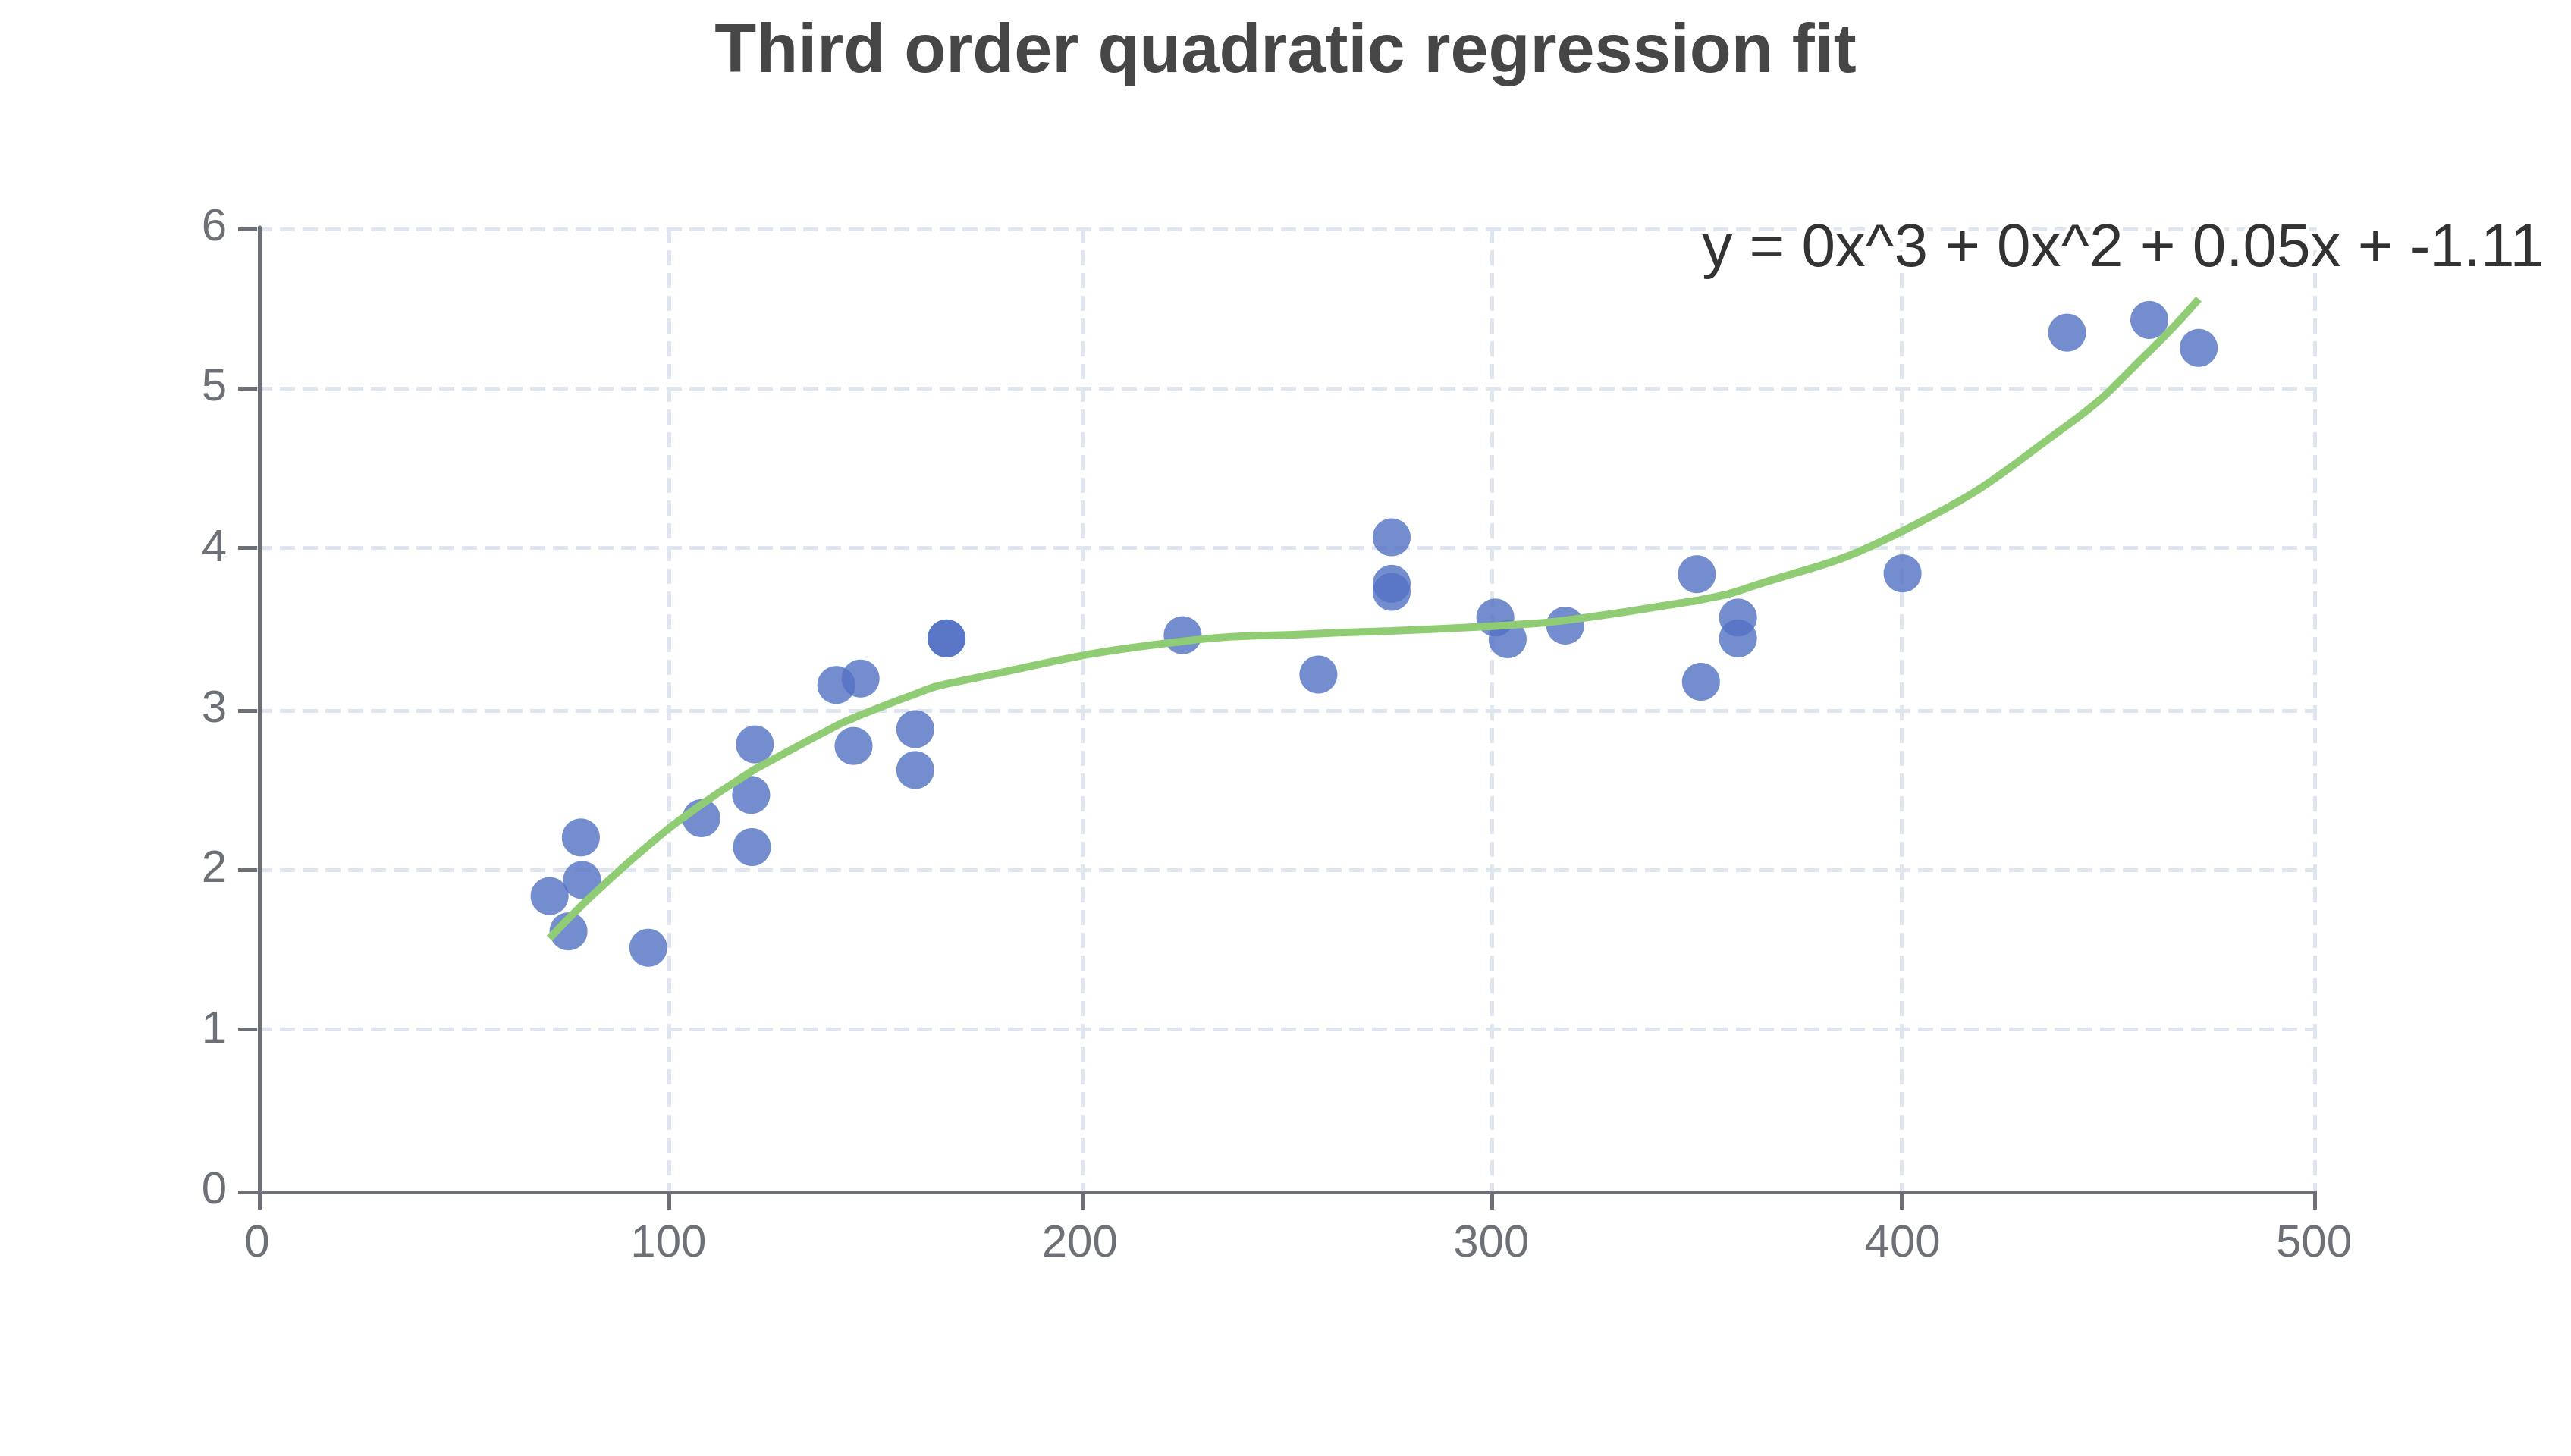 Third order quadratic regression fit.